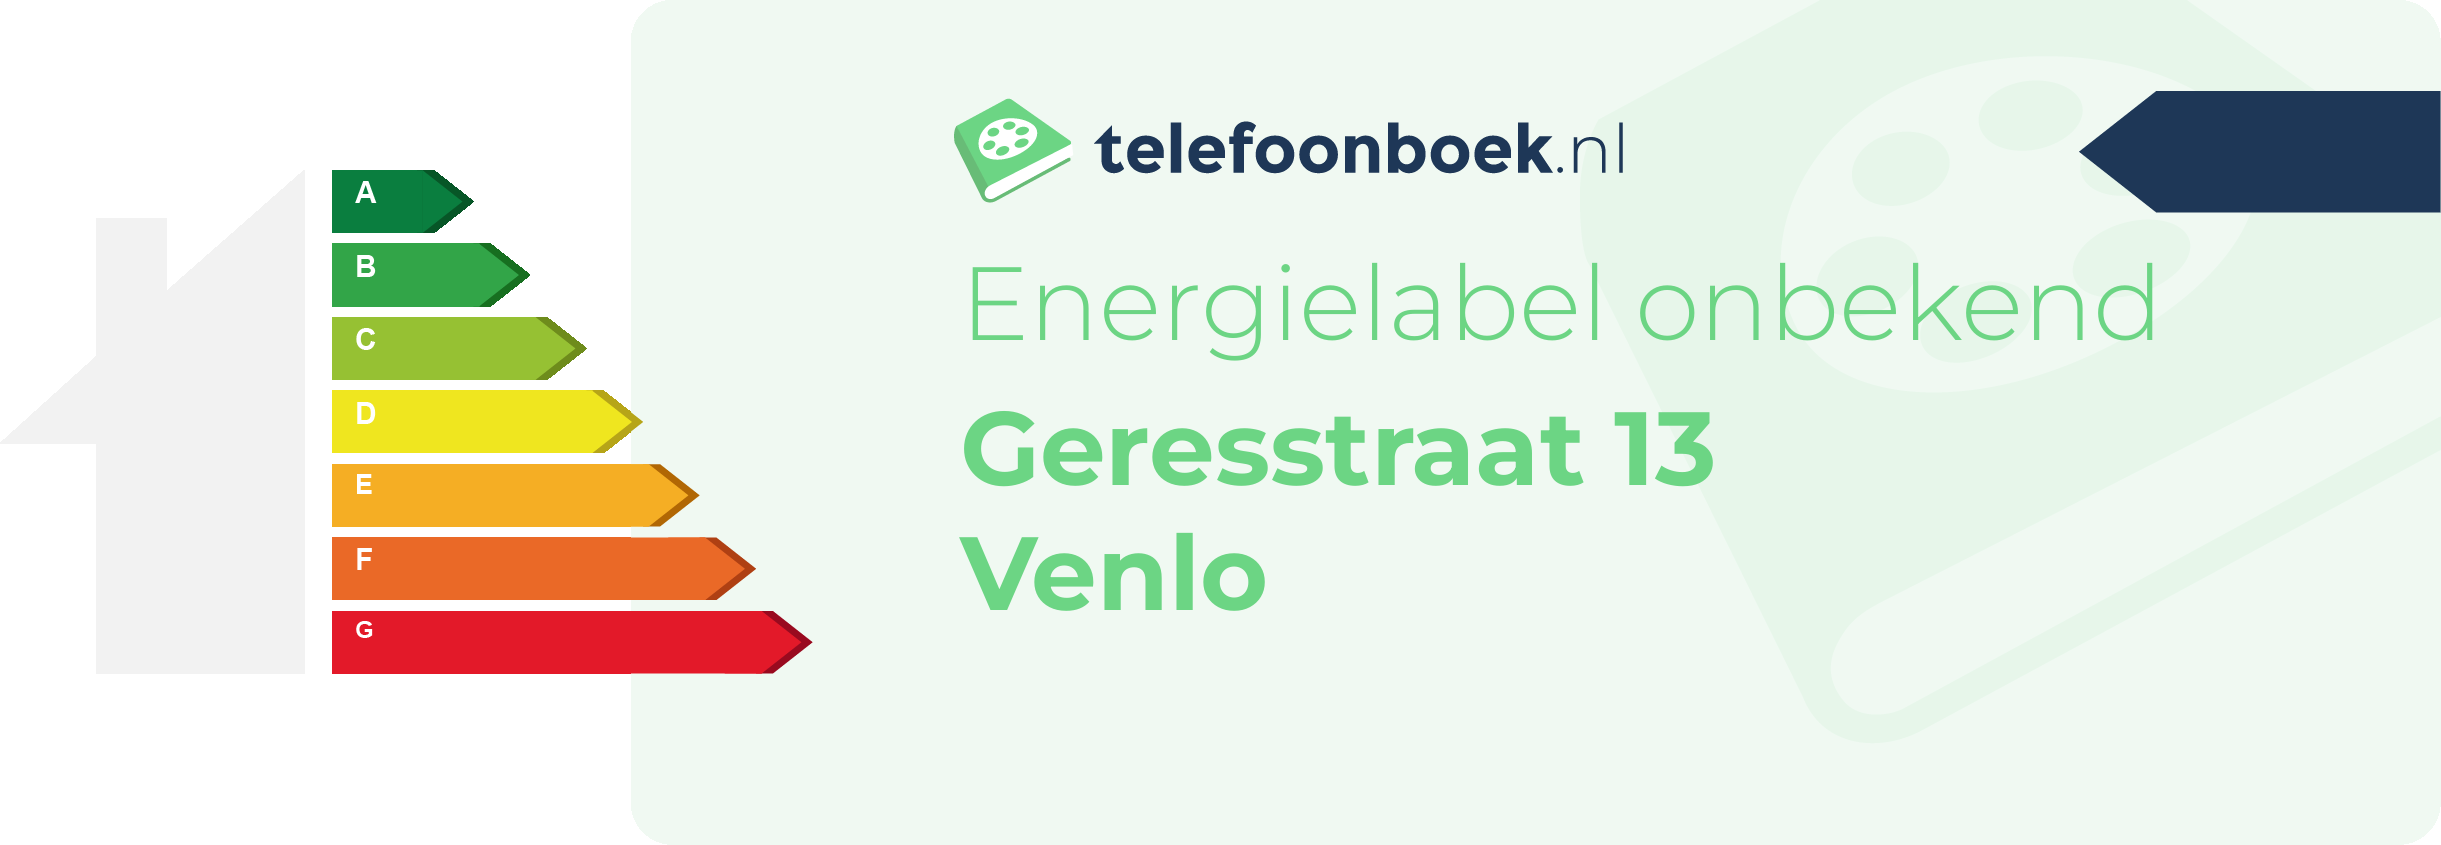 Energielabel Geresstraat 13 Venlo